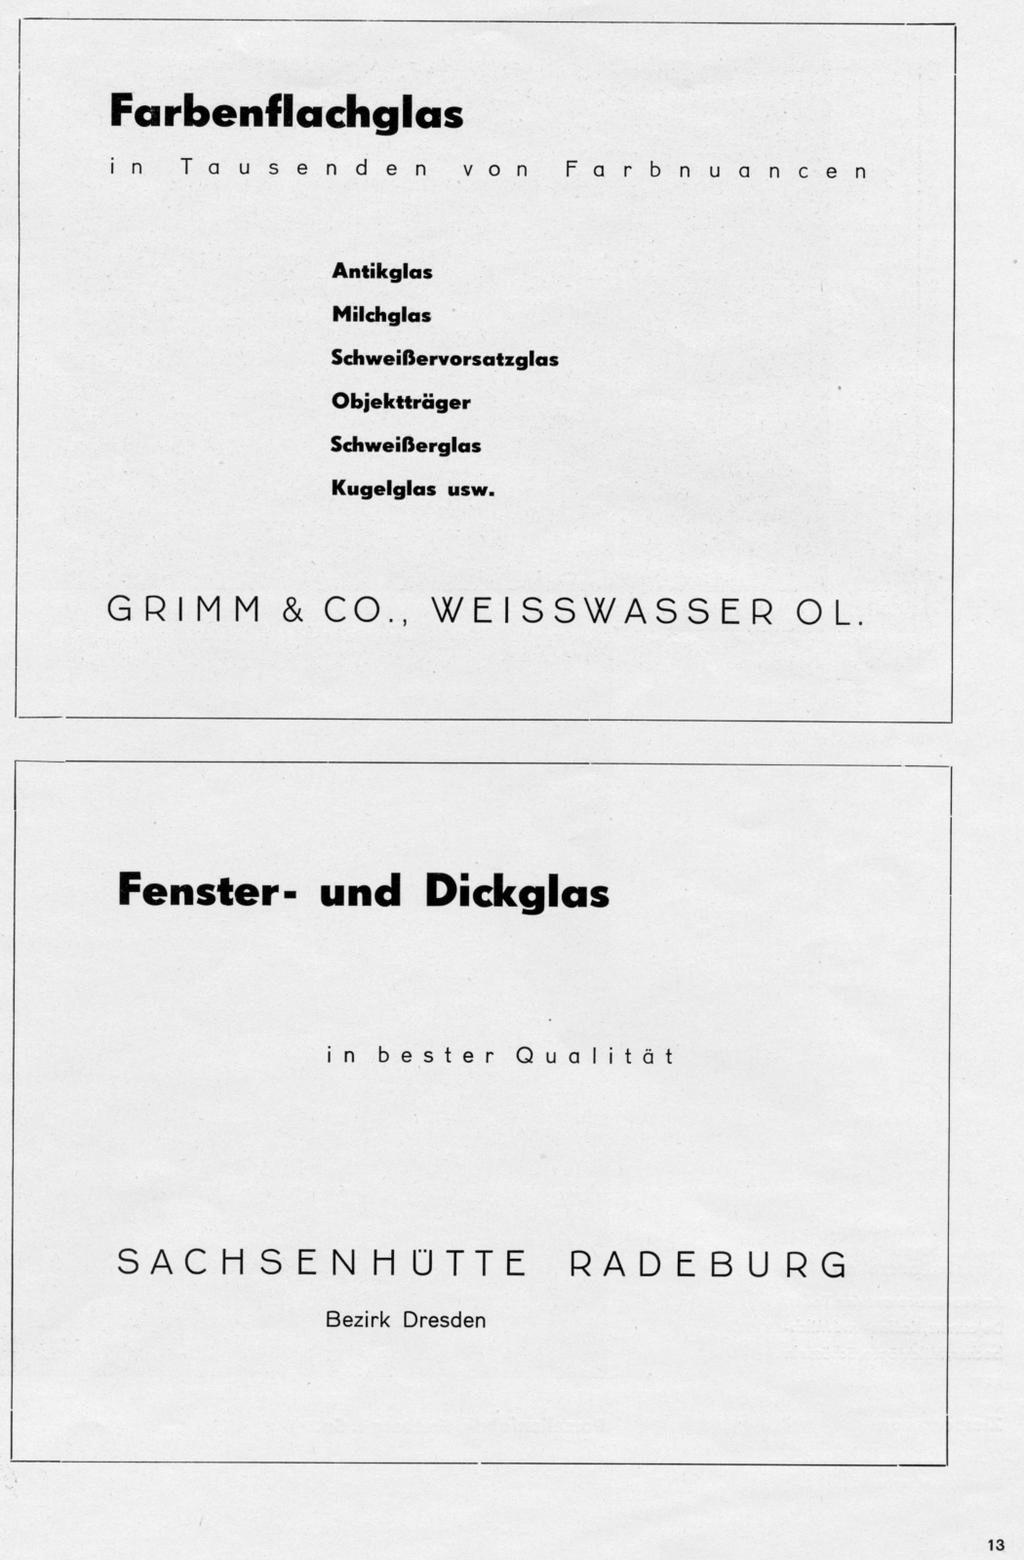 Abb. 2008-3-07/012 MB VVB Kamenz 1949, Seite 13, Farbenflachglas Grimm & Co., Weißwasser OL.